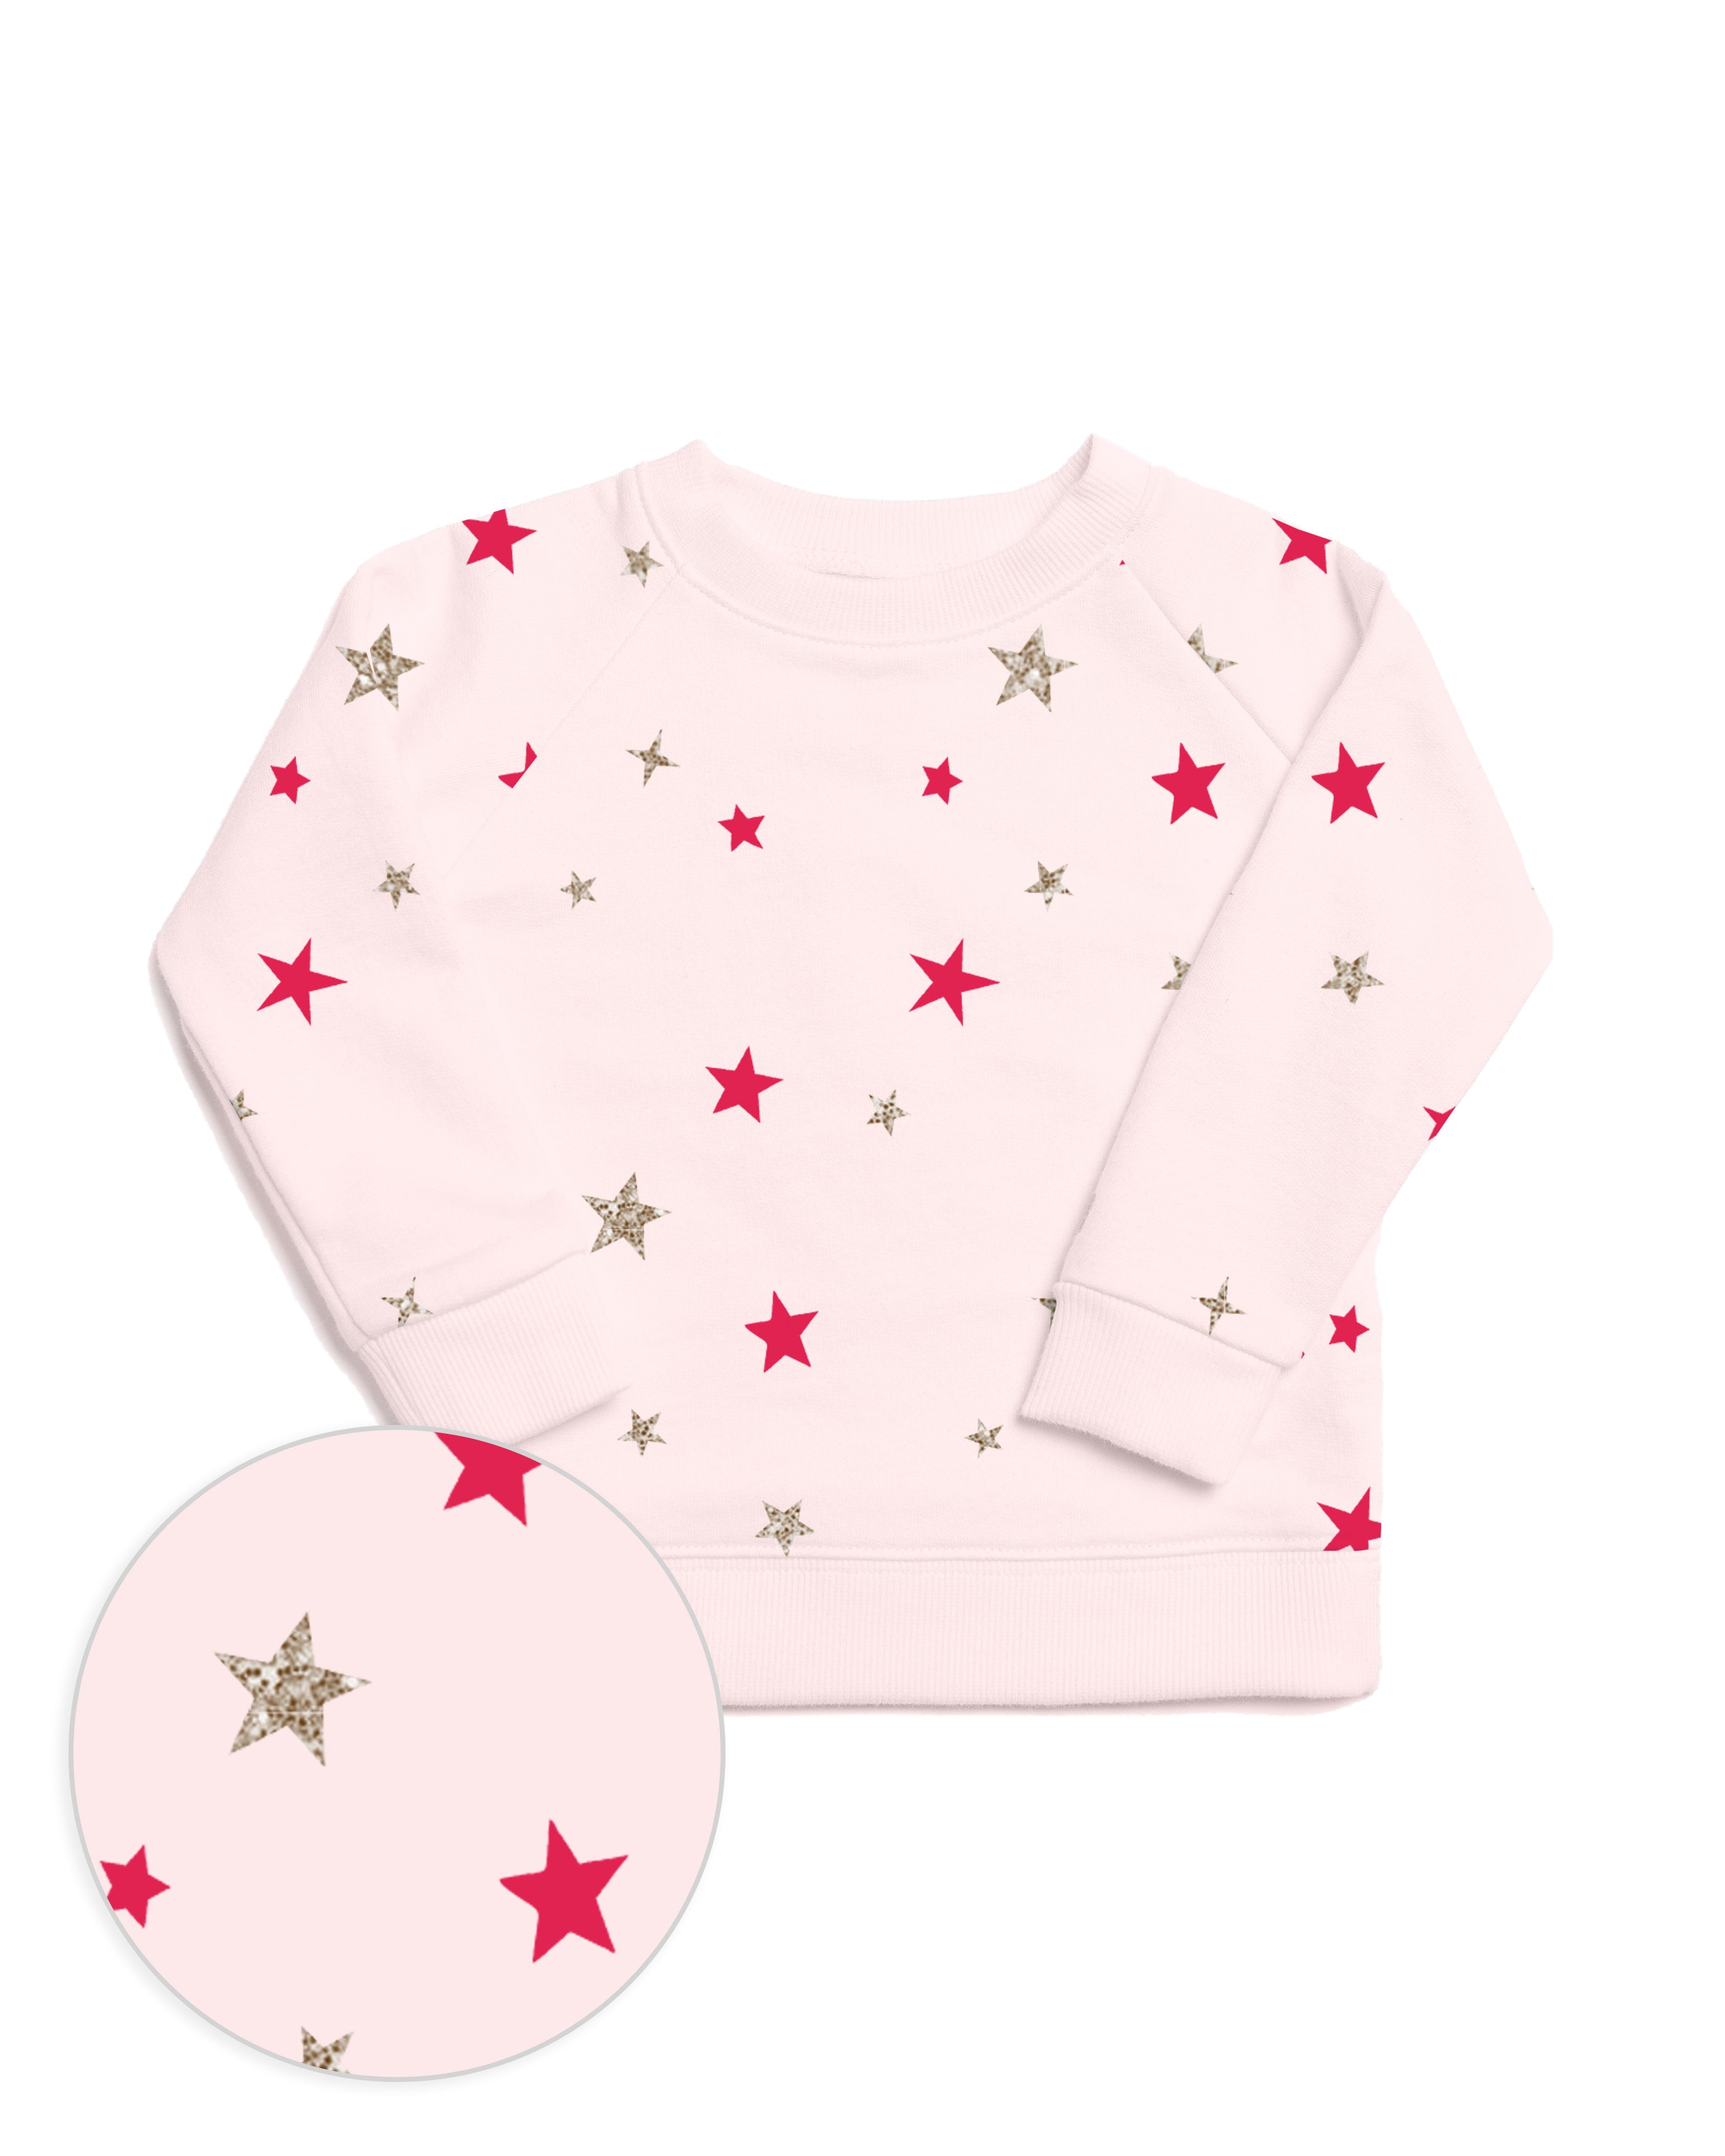 The Organic Printed Pullover Sweatshirt [Sparkle Stars]